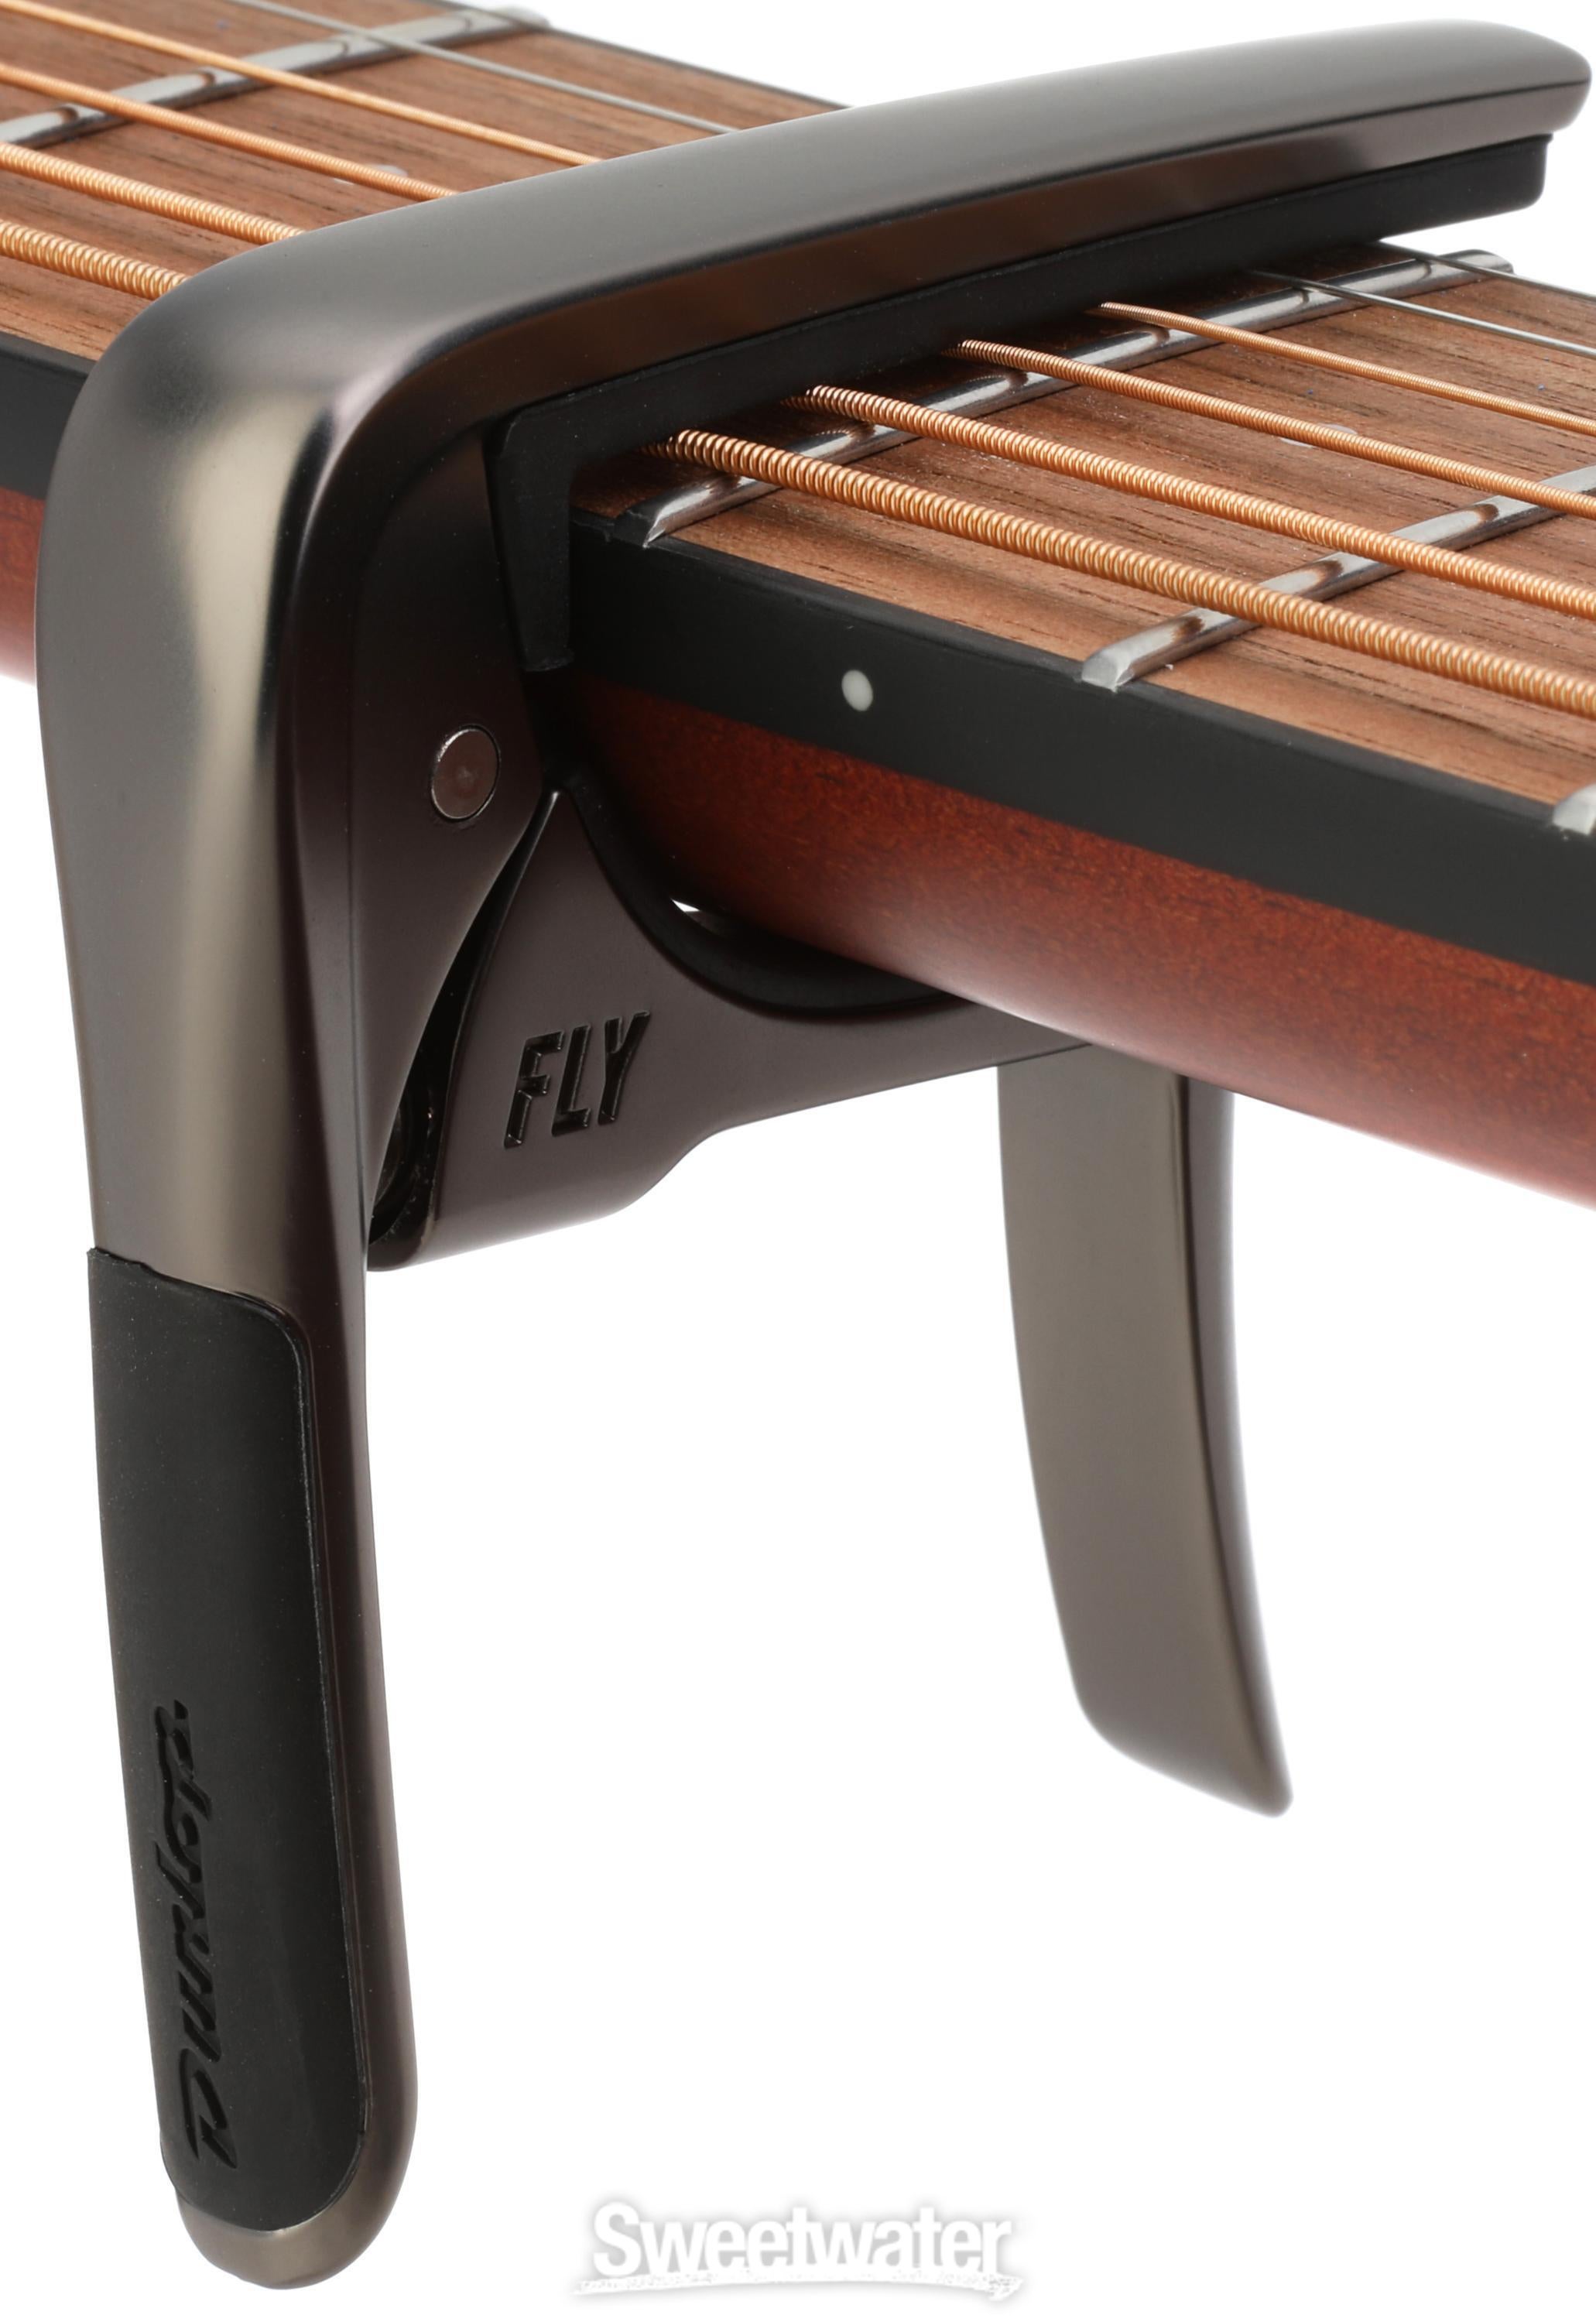 Dunlop 63CBK Trigger Fly Acoustic Guitar Capo - Gun Metal | Sweetwater